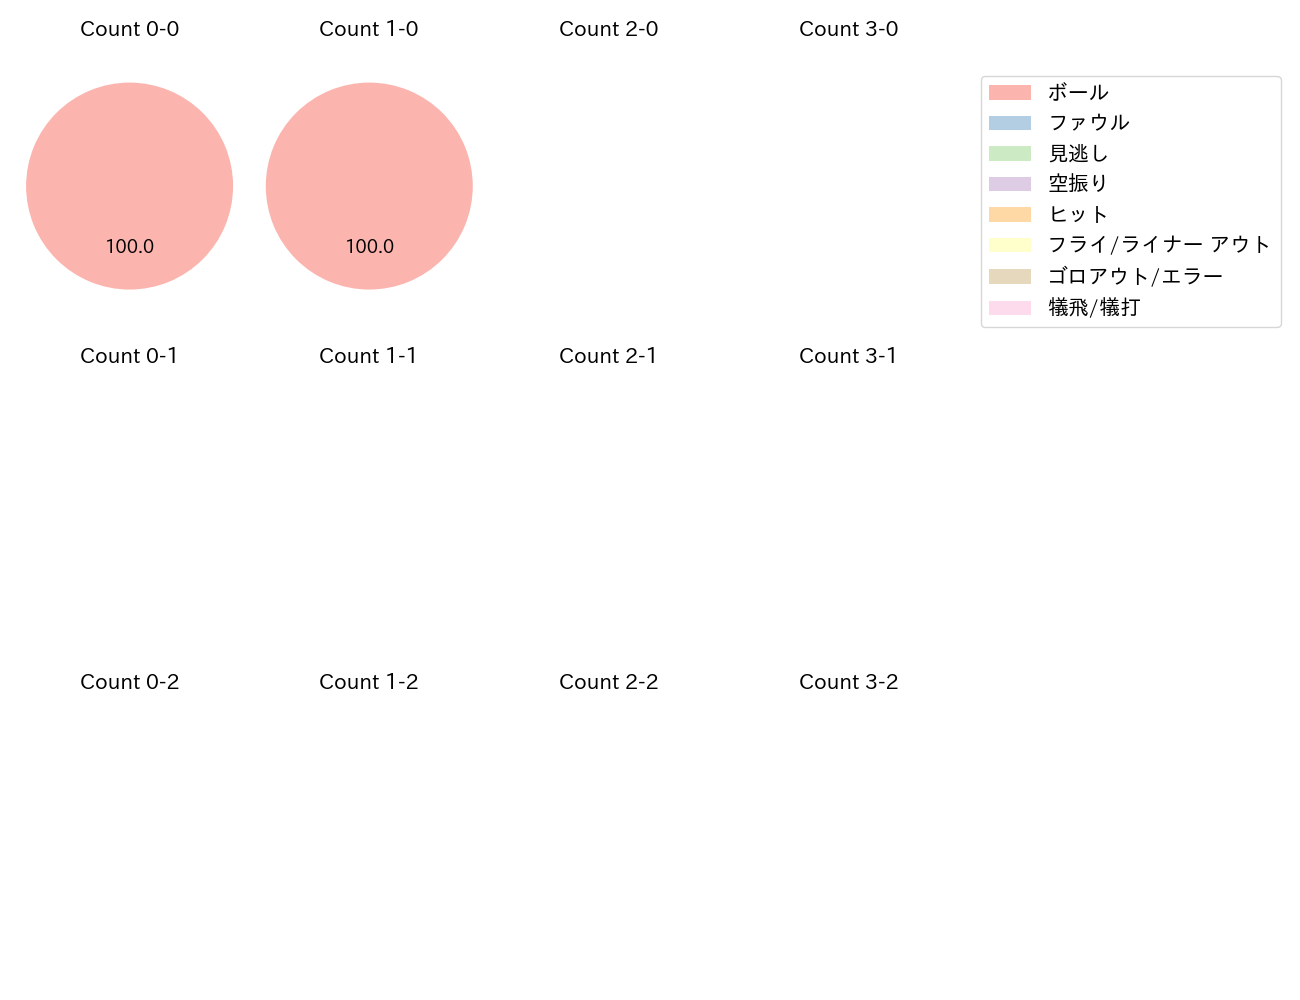 大城 滉二の球数分布(2023年10月)